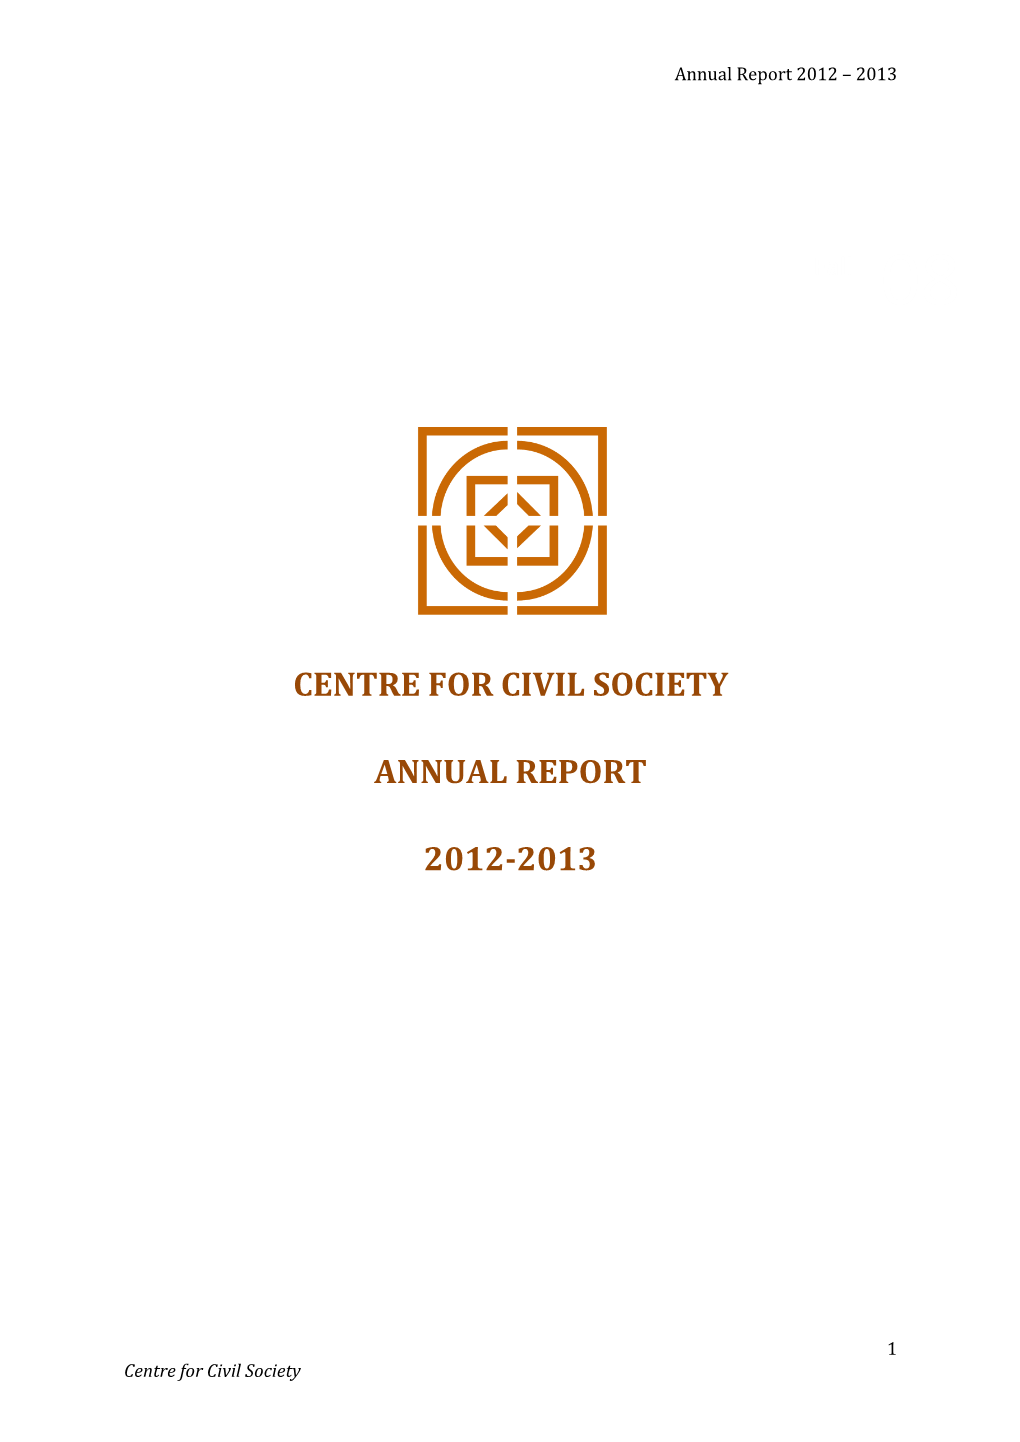 Centre for Civil Society Annual Report 2012-2013